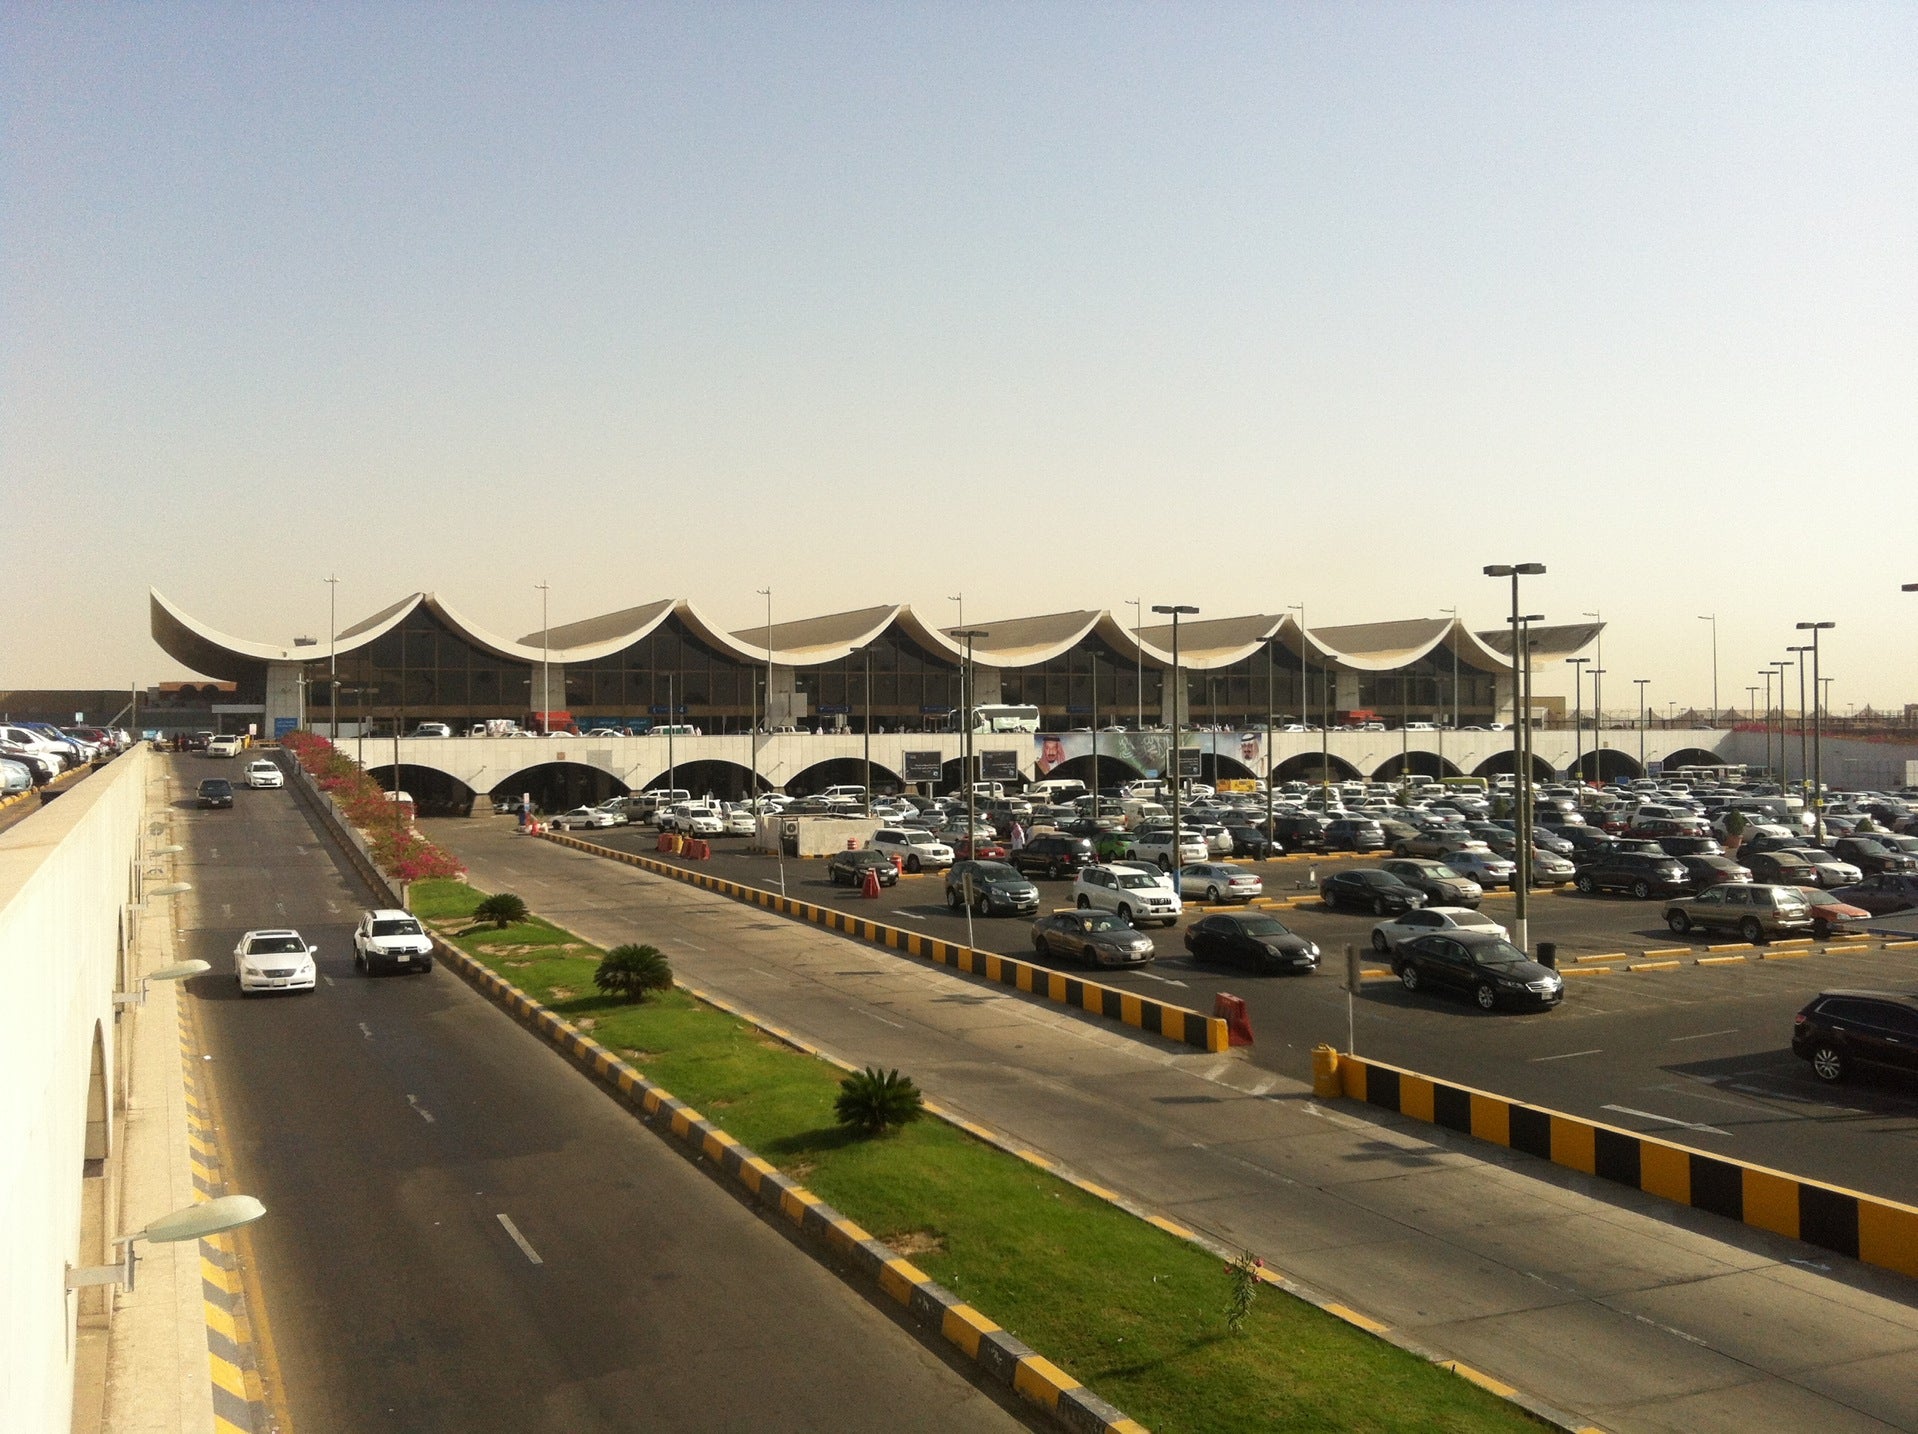 King Abdulaziz International Airport (JED) (مطار الملك عبدالعزيز الدولي)